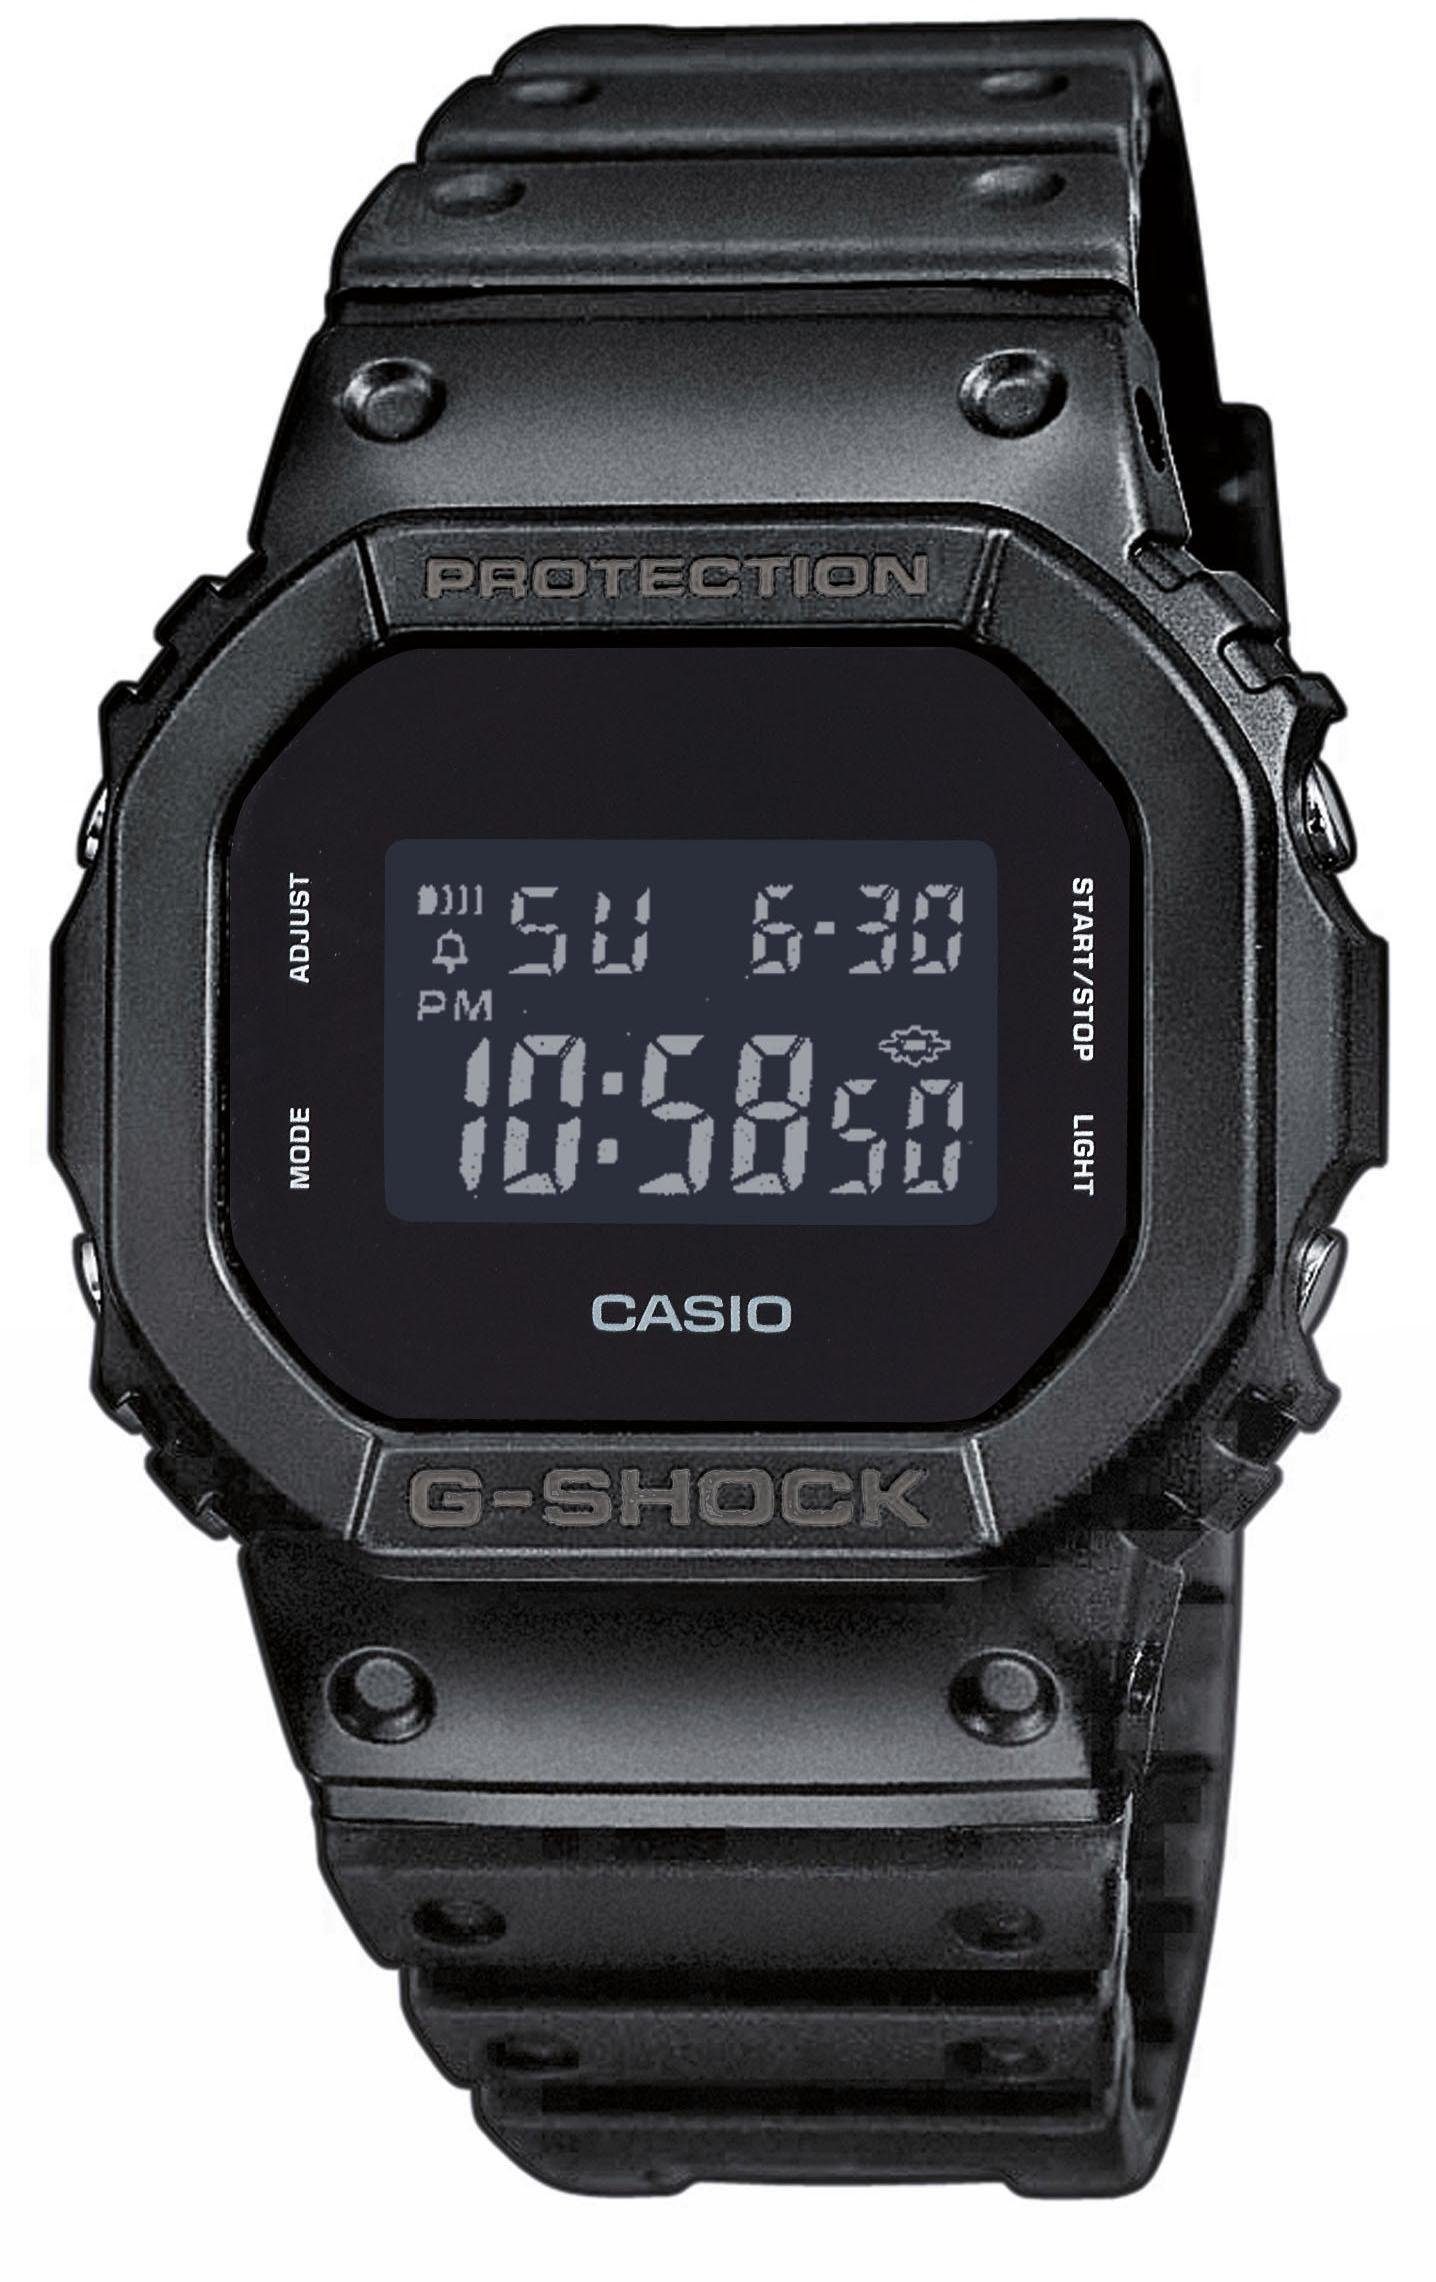 DW-5600BB-1ER G-SHOCK CASIO Chronograph